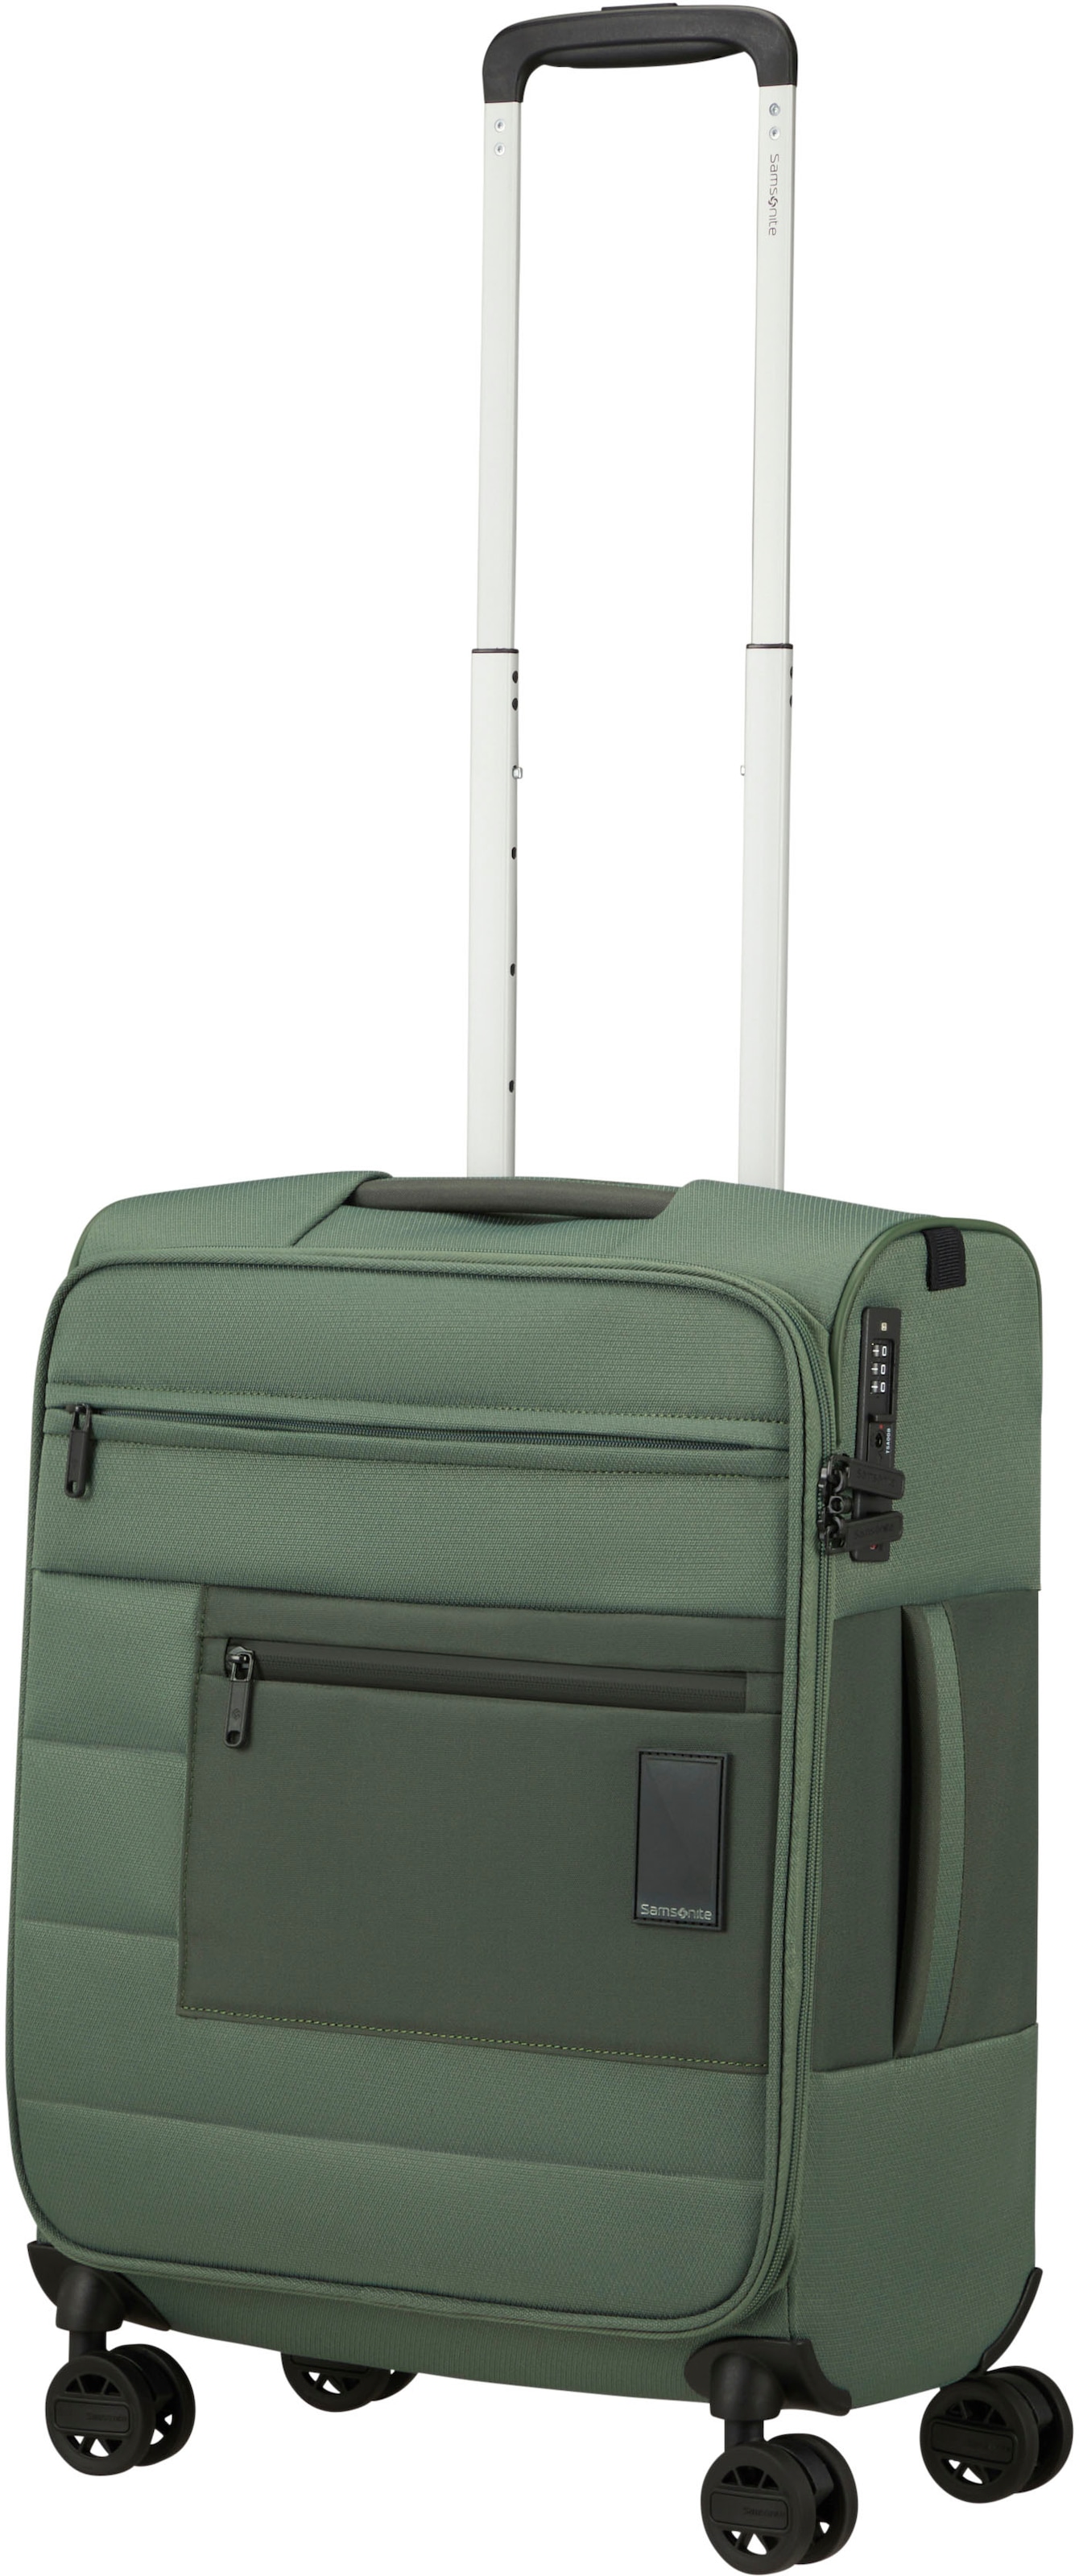 Samsonite Weichgepäck-Trolley »Vacay, pistachio green, 55 cm«, 4 Rollen, Handgepäck-Koffer Reisegepäck Reisekoffer TSA-Zahlenschloss